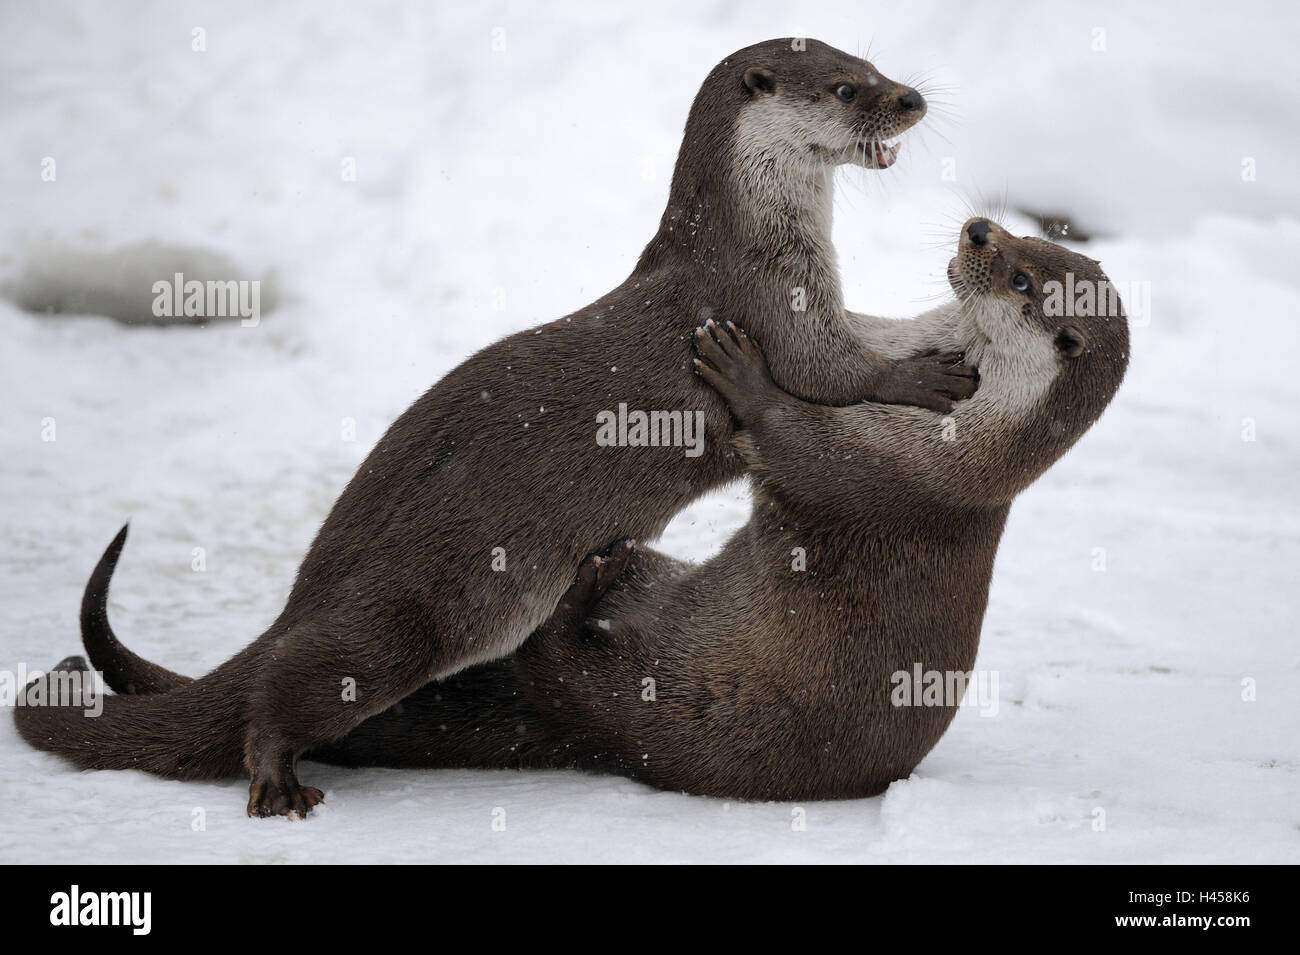 European otters, Lutra lutra, European viper, winter, ice, snow, captive, fight, Stock Photo